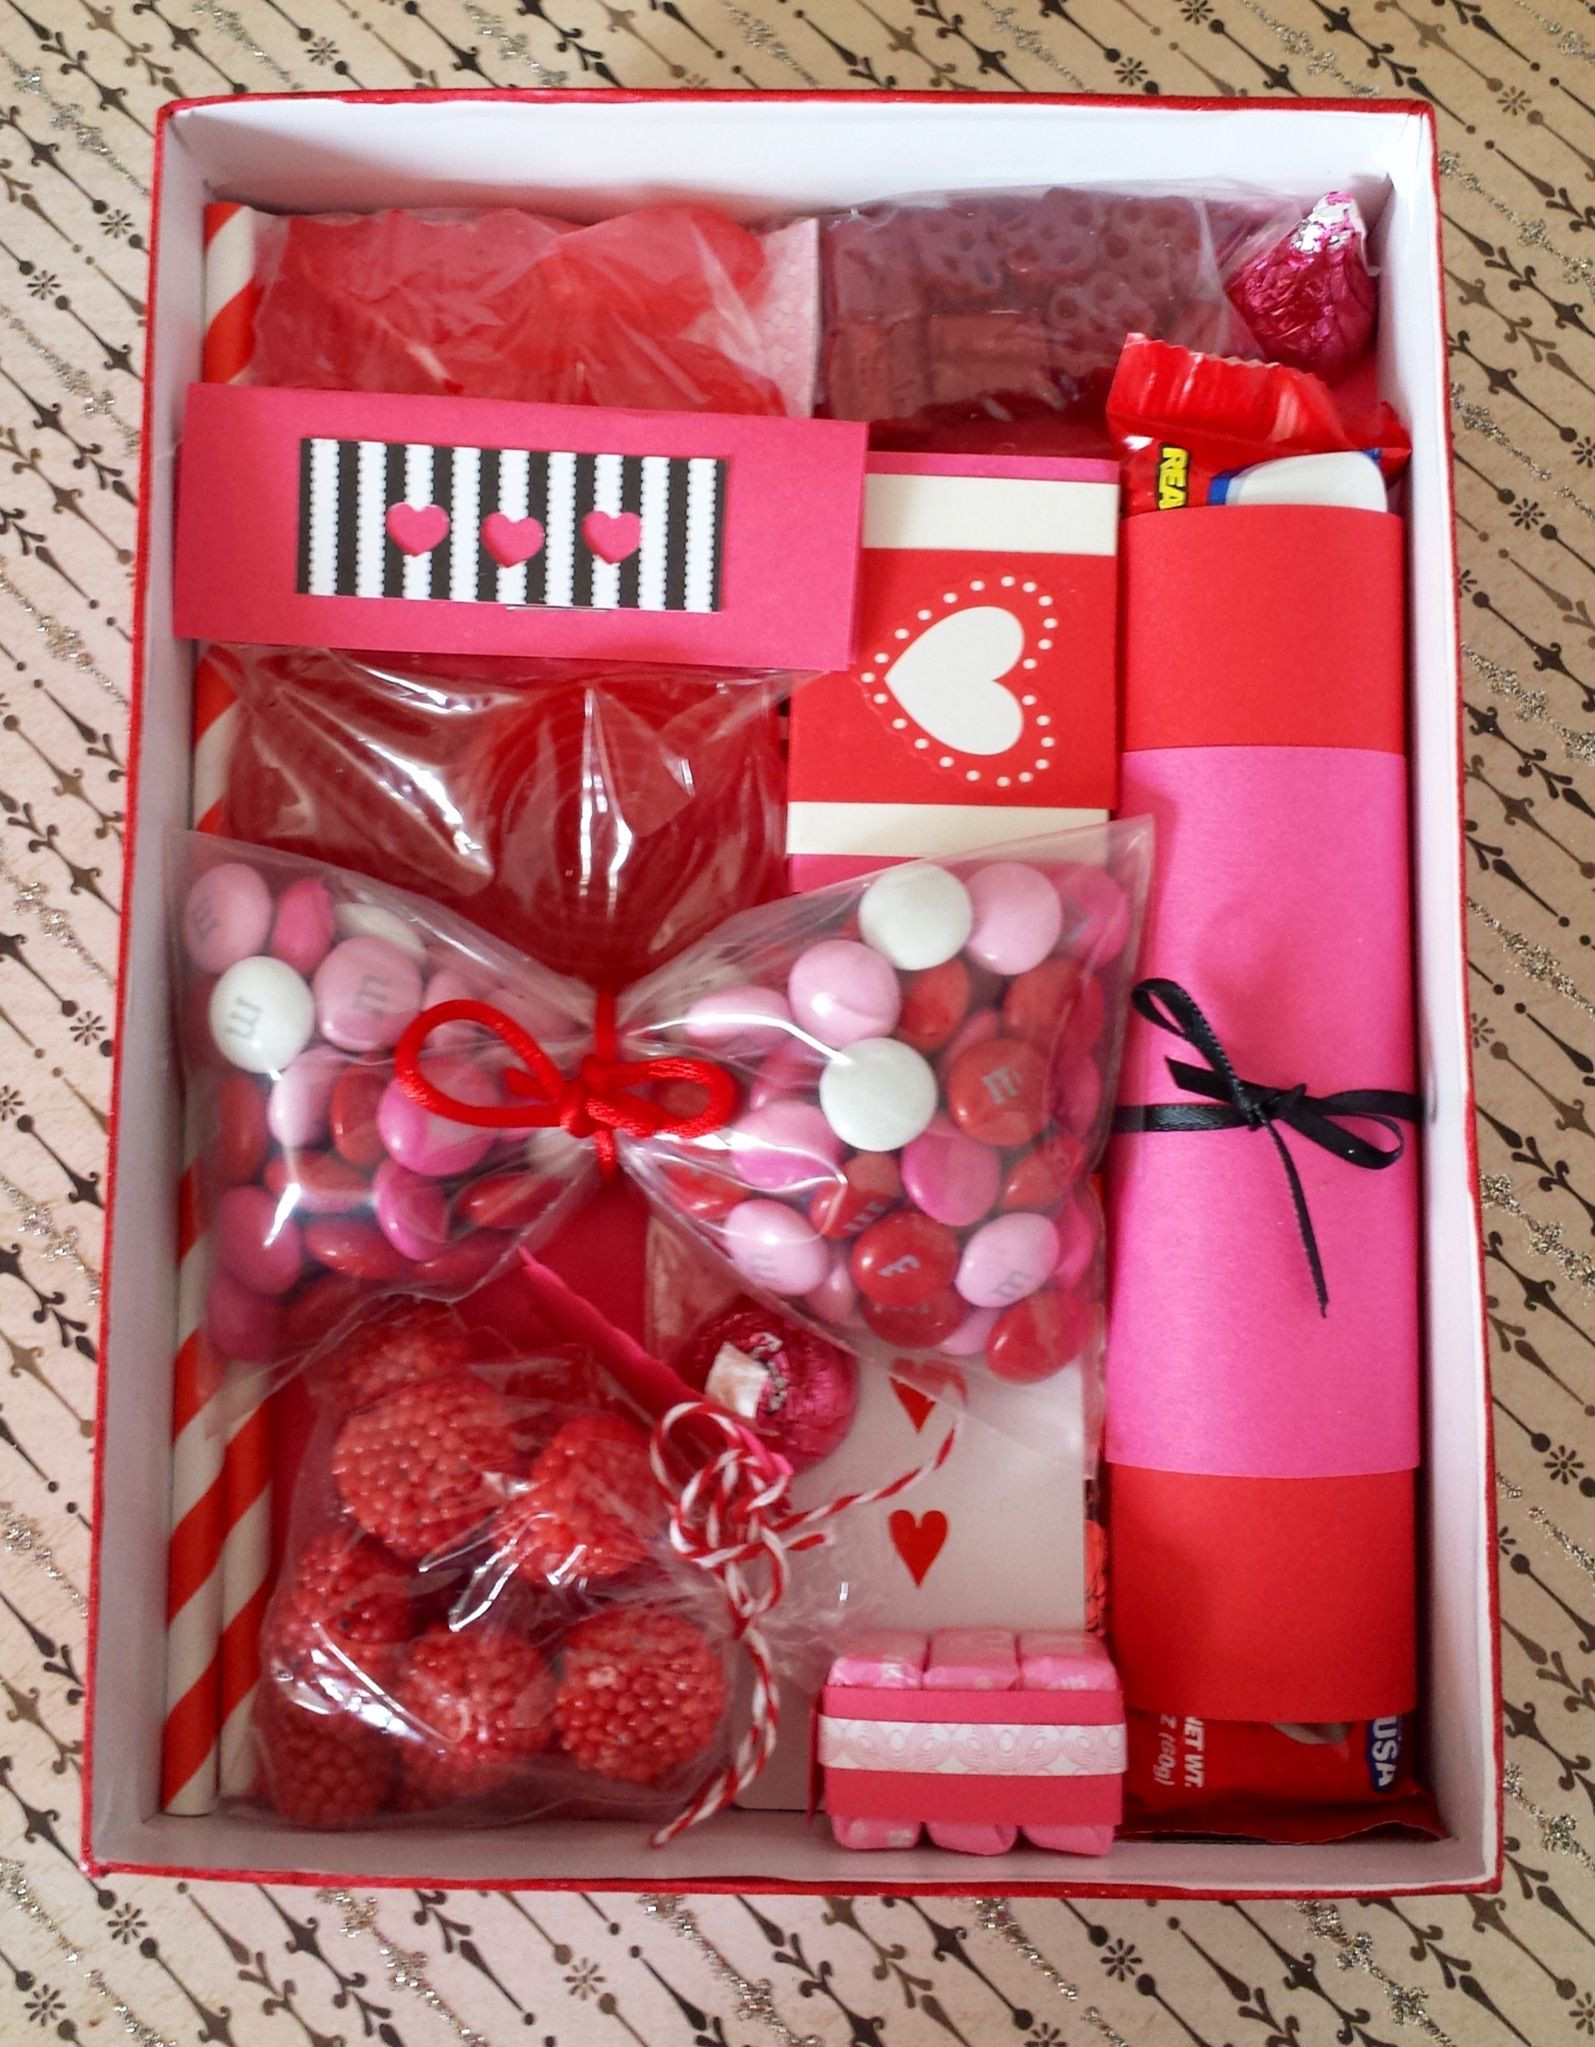 Valentines Gift Box Ideas
 So I Made Box of love